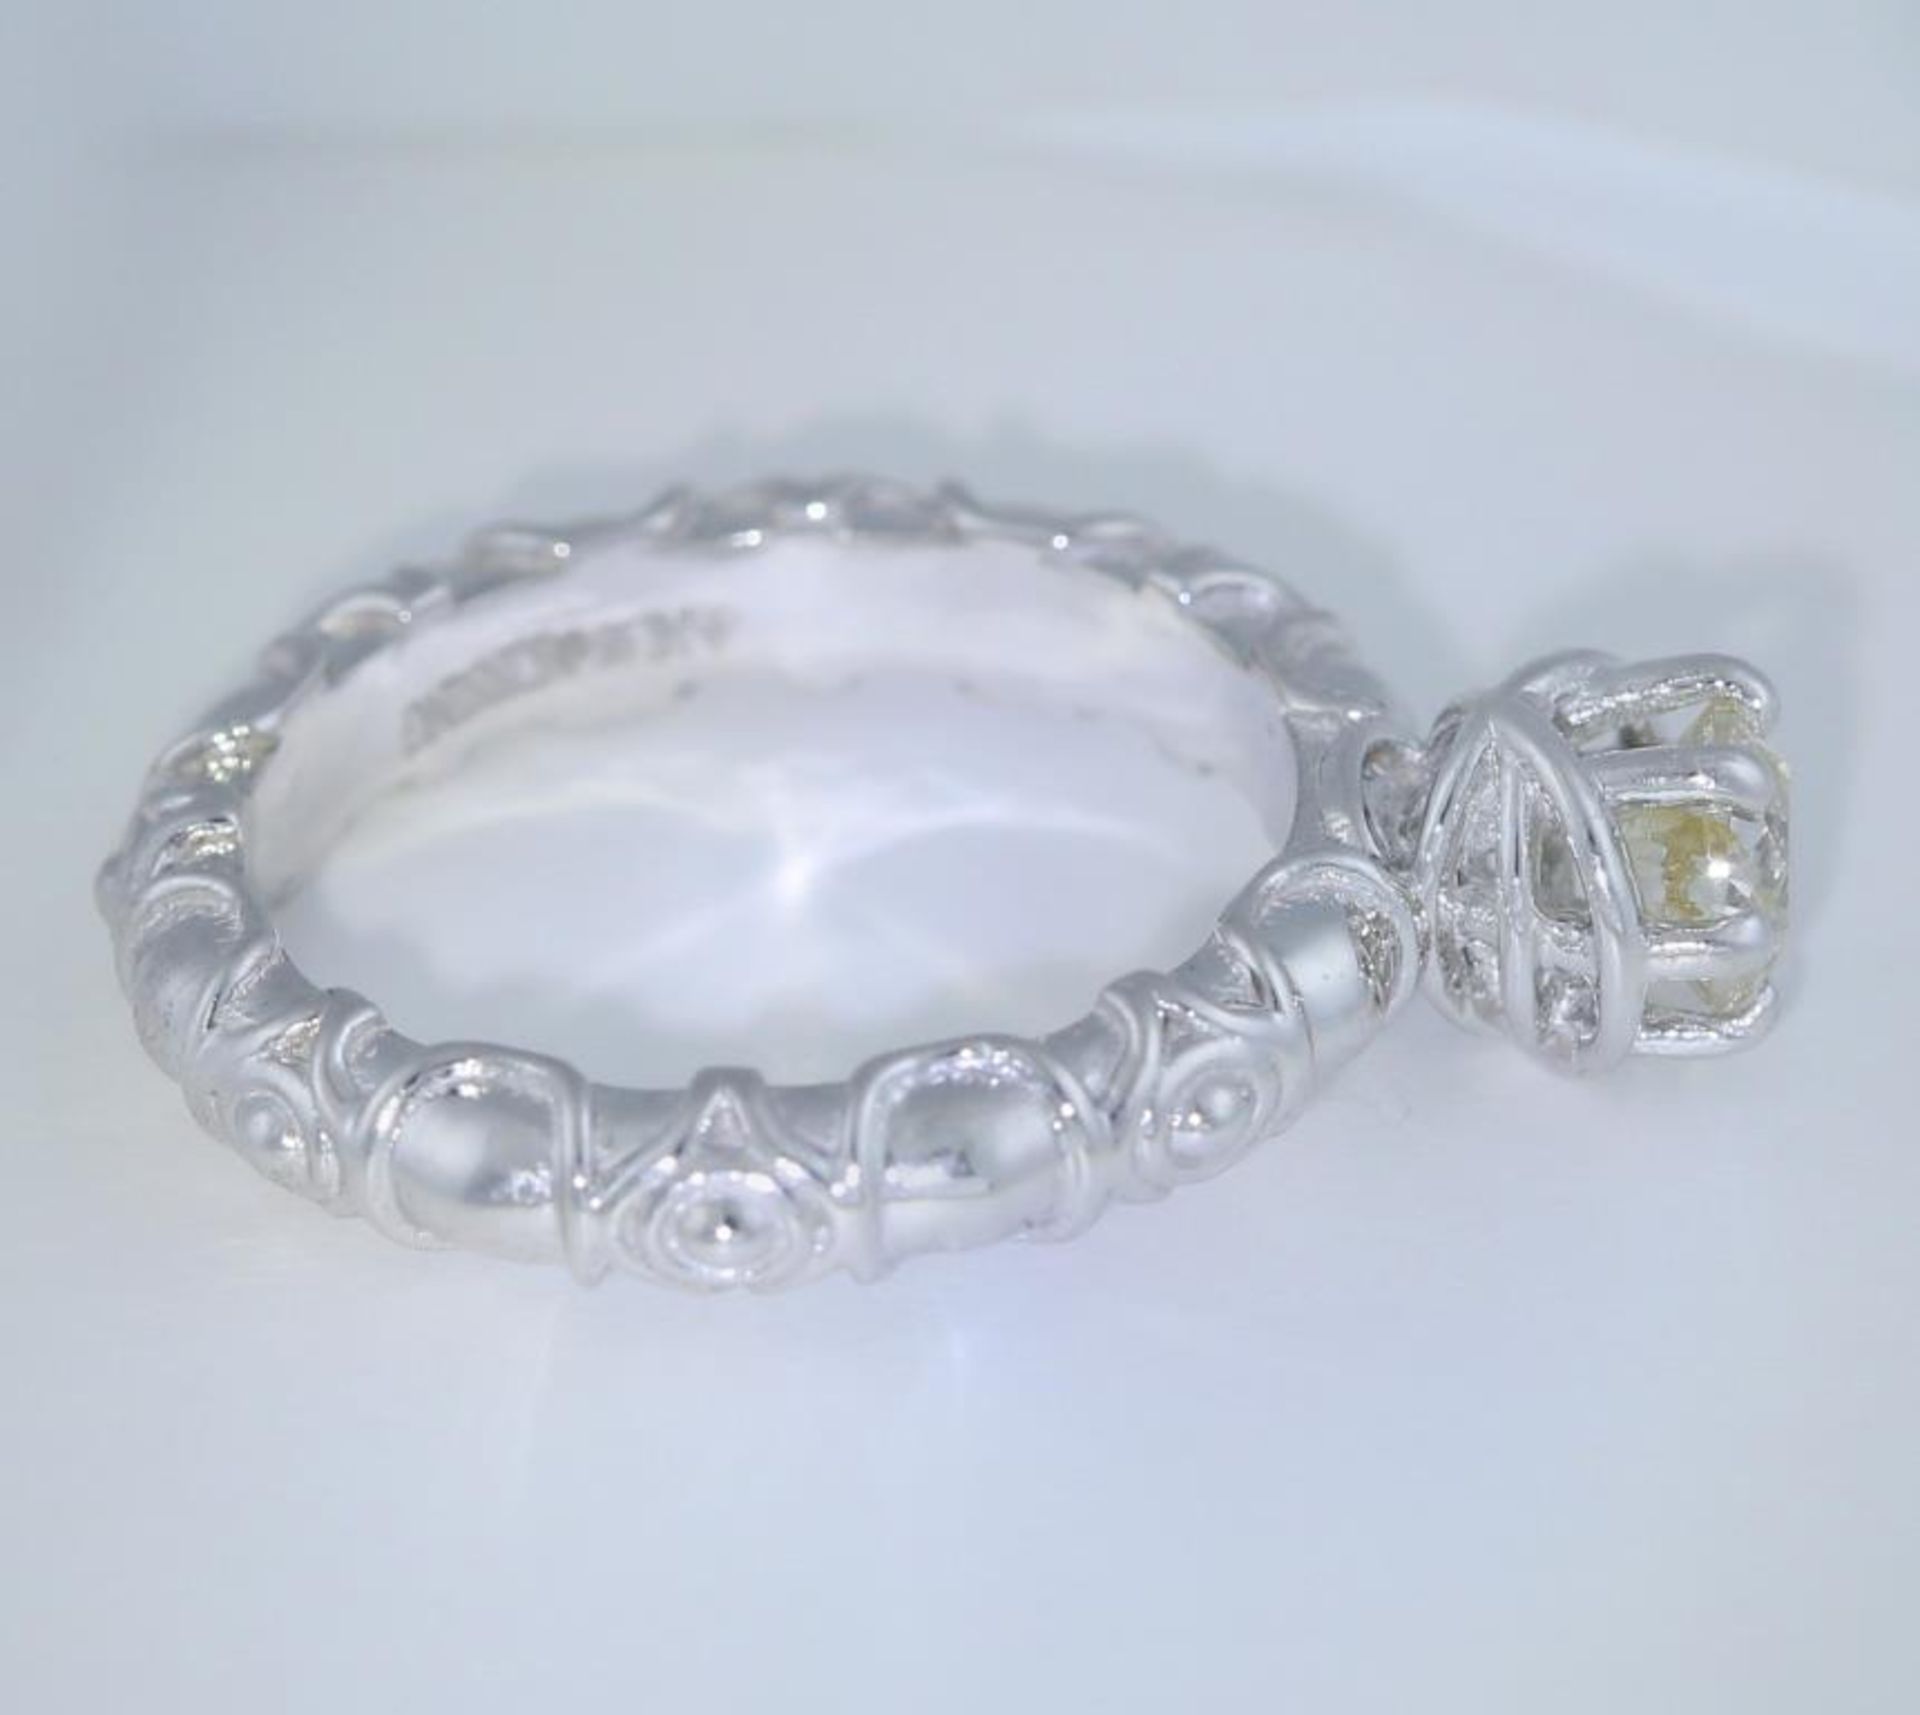 14 K White Gold Certified Designer Solitaire Diamond Ring - Image 5 of 8